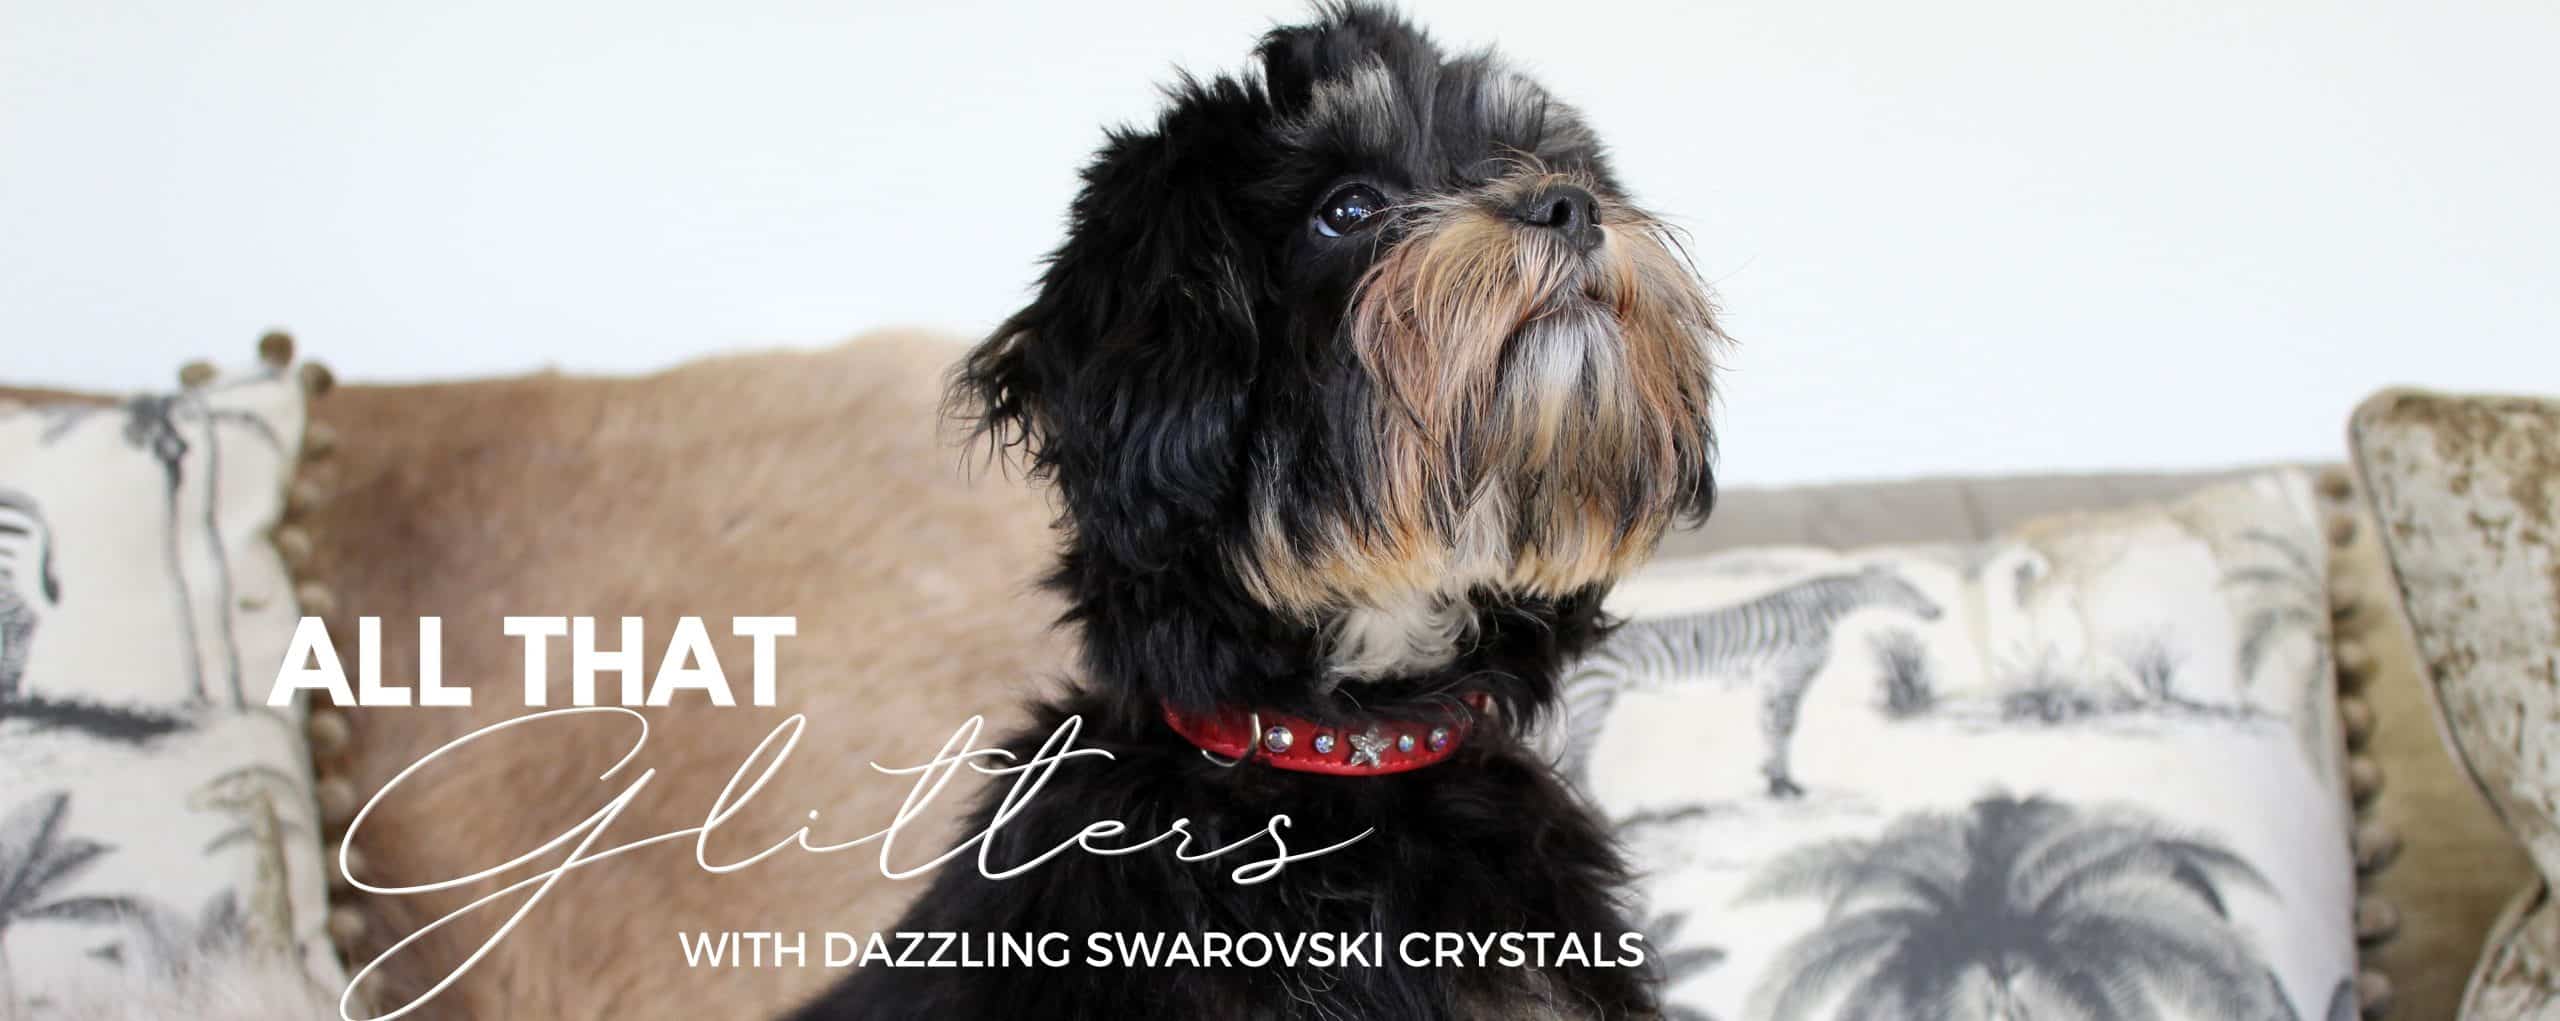 Dog Collar Swarovski Crystals Home Page Banner